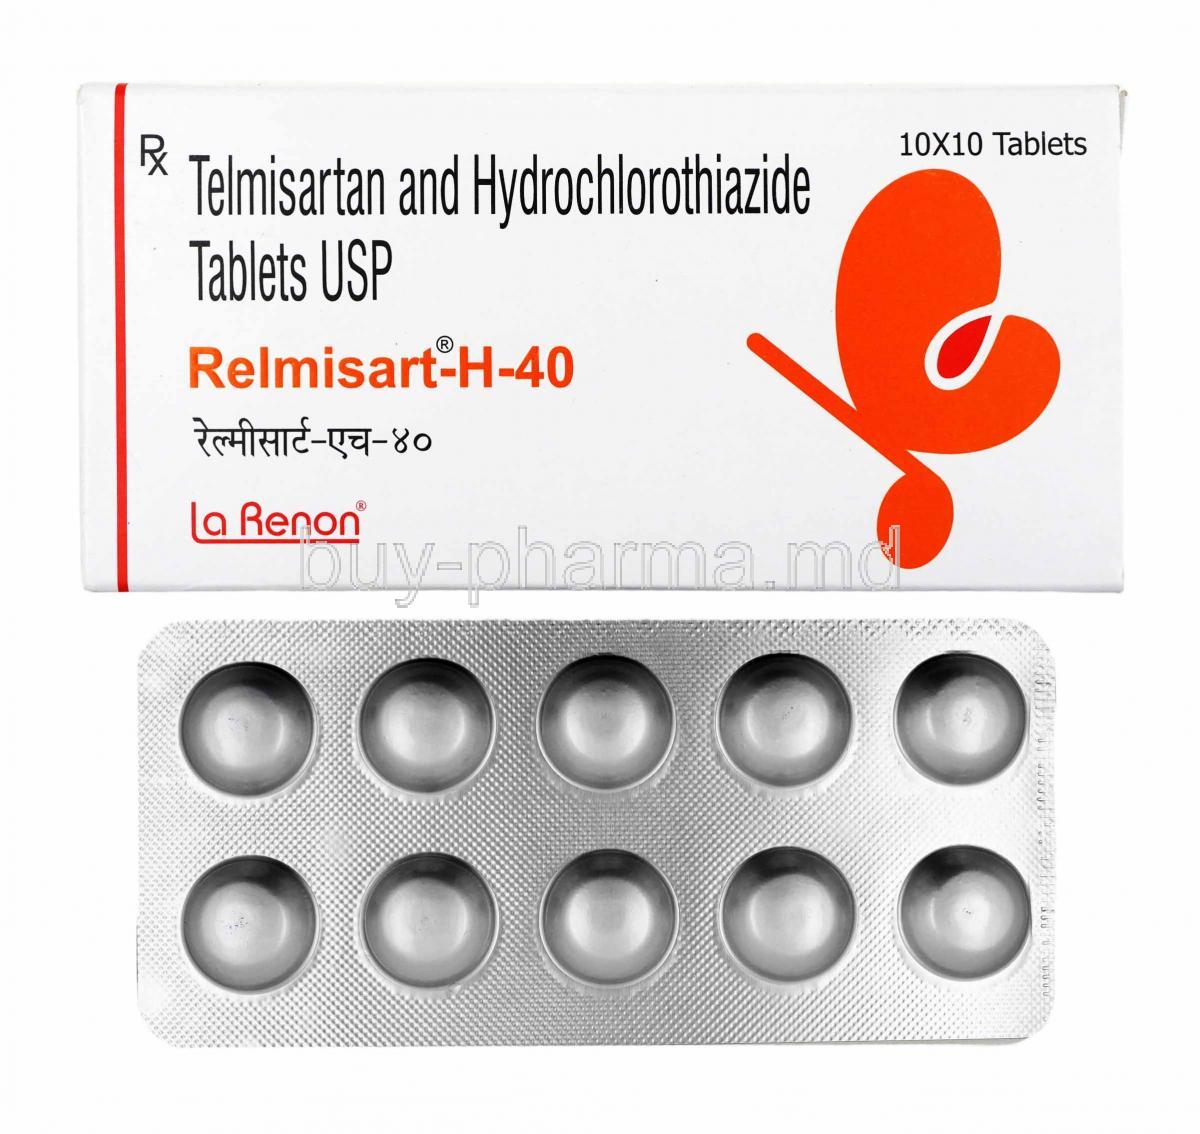 Relmisart-H, Telmisartan and Hydrochlorothiazide box and tablets